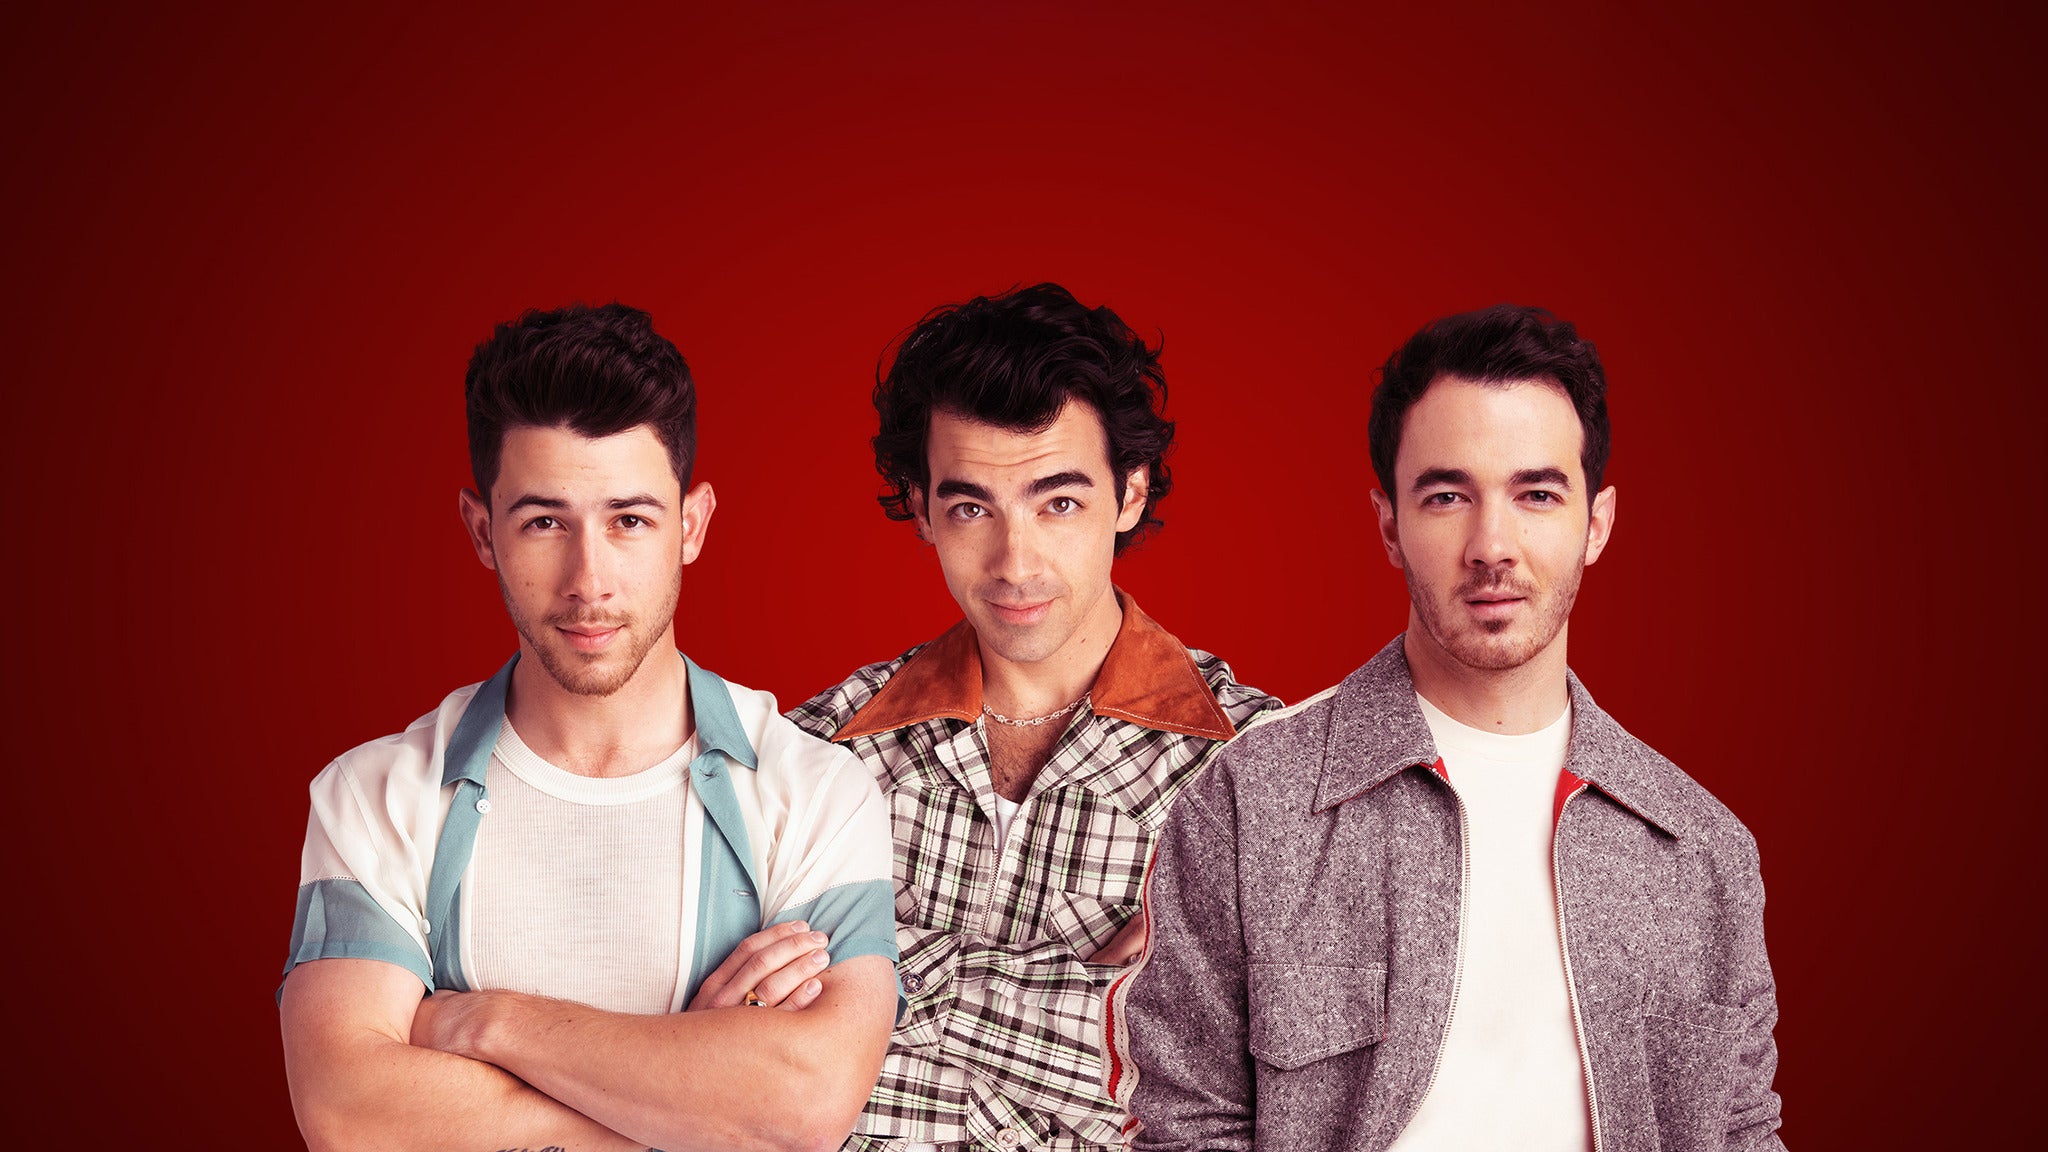 Jonas Brothers - Live in Vegas in Las Vegas promo photo for Live Nation presale offer code